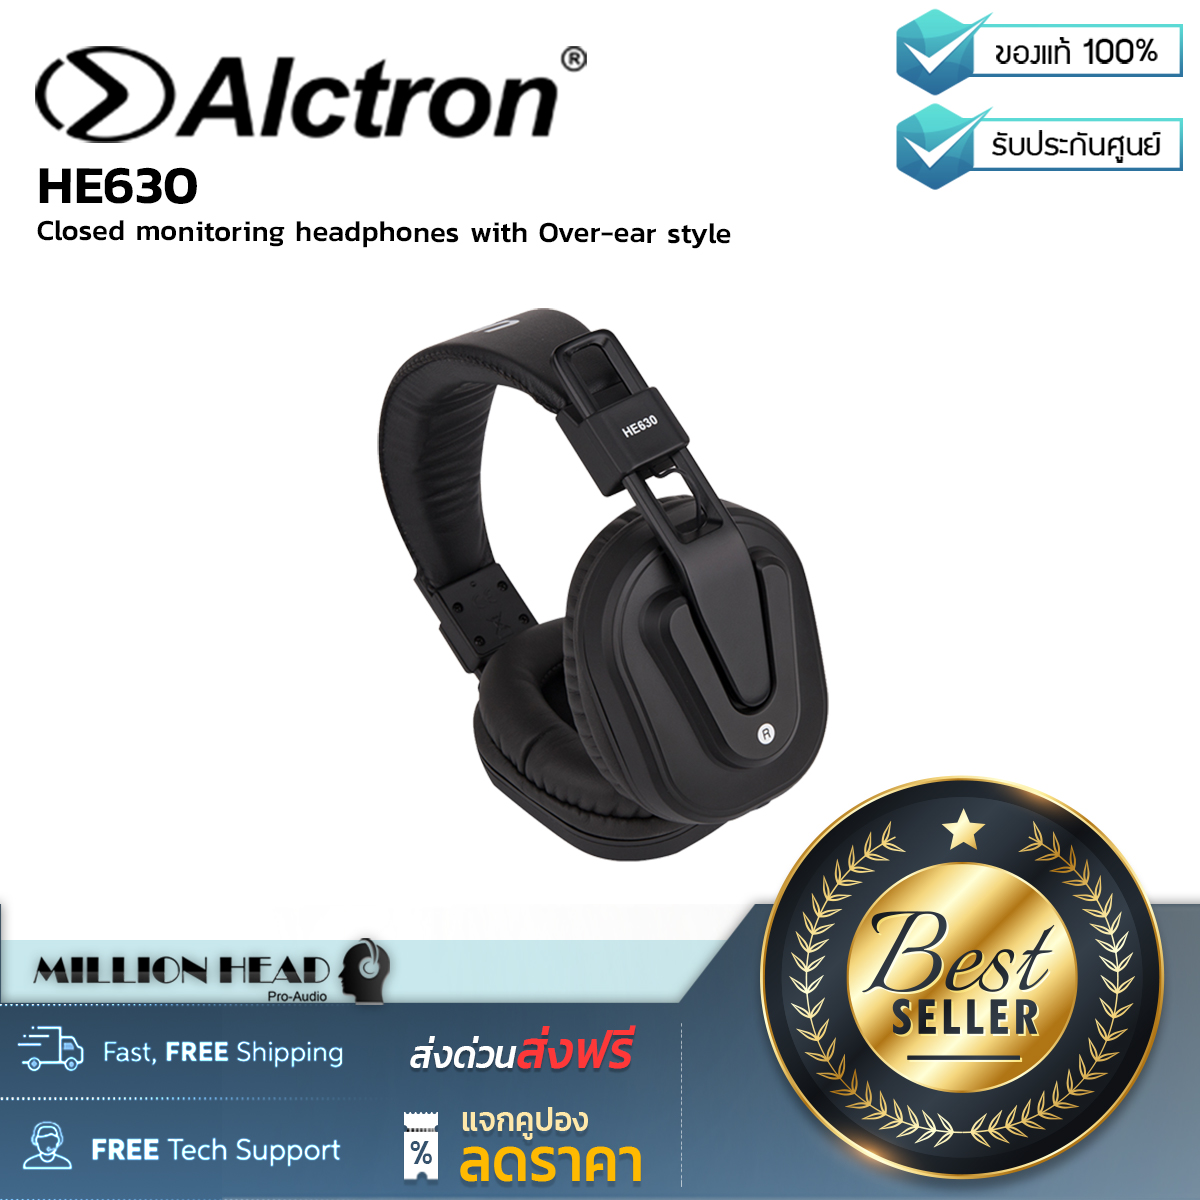 Alctron : HE630 by Millionhead (หูฟังมอนิเตอร์แบบ Closed Back มาในรูปแบบ Over-ear style ทำให้ตัดเสียงรบกวนจากภายนอกได้ดี)